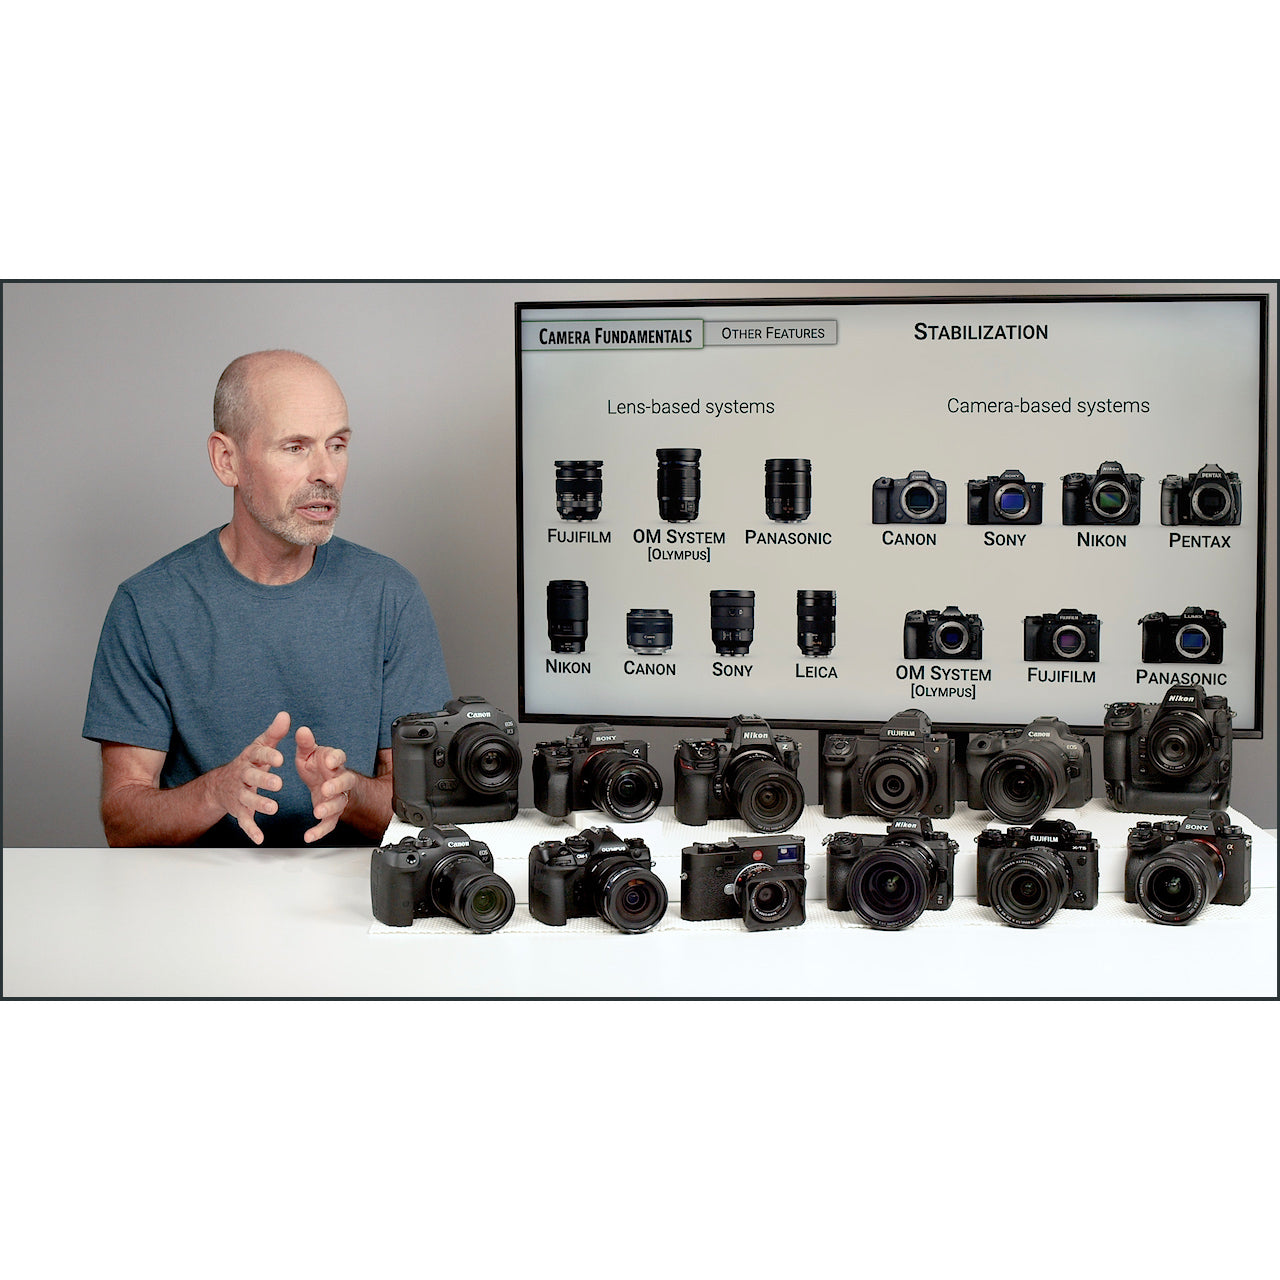 Nikon Zfc: Complete Camera Guide – John Greengo Photography